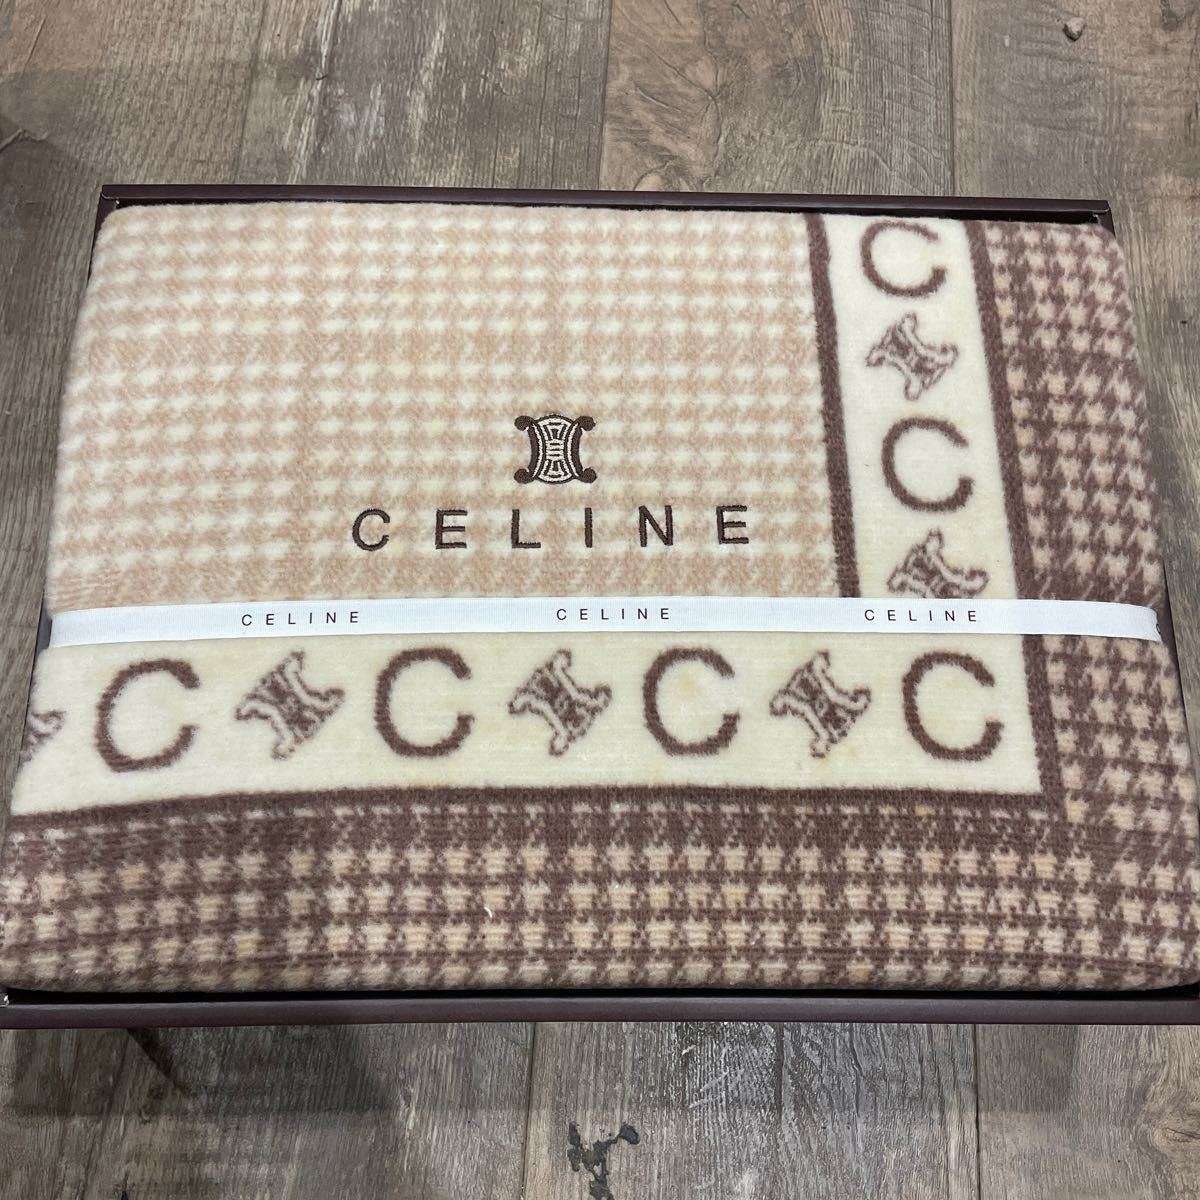 新品 未使用 贈答品 保管日 CELINE セリーヌ シルク混 綿毛布 CL1010